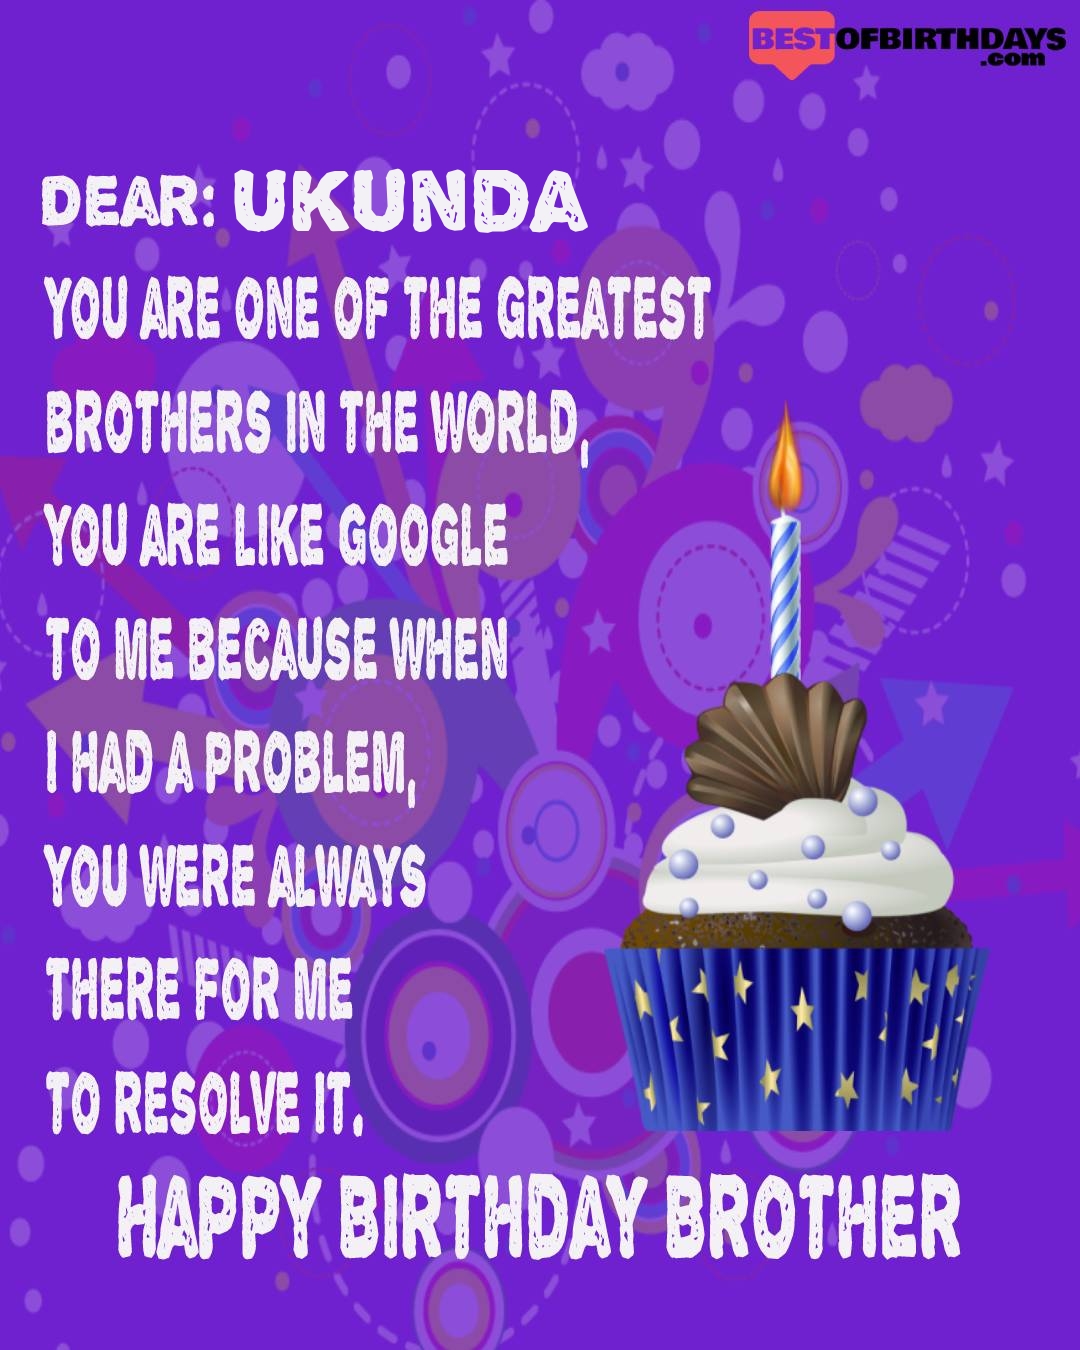 Happy birthday ukunda bhai brother bro